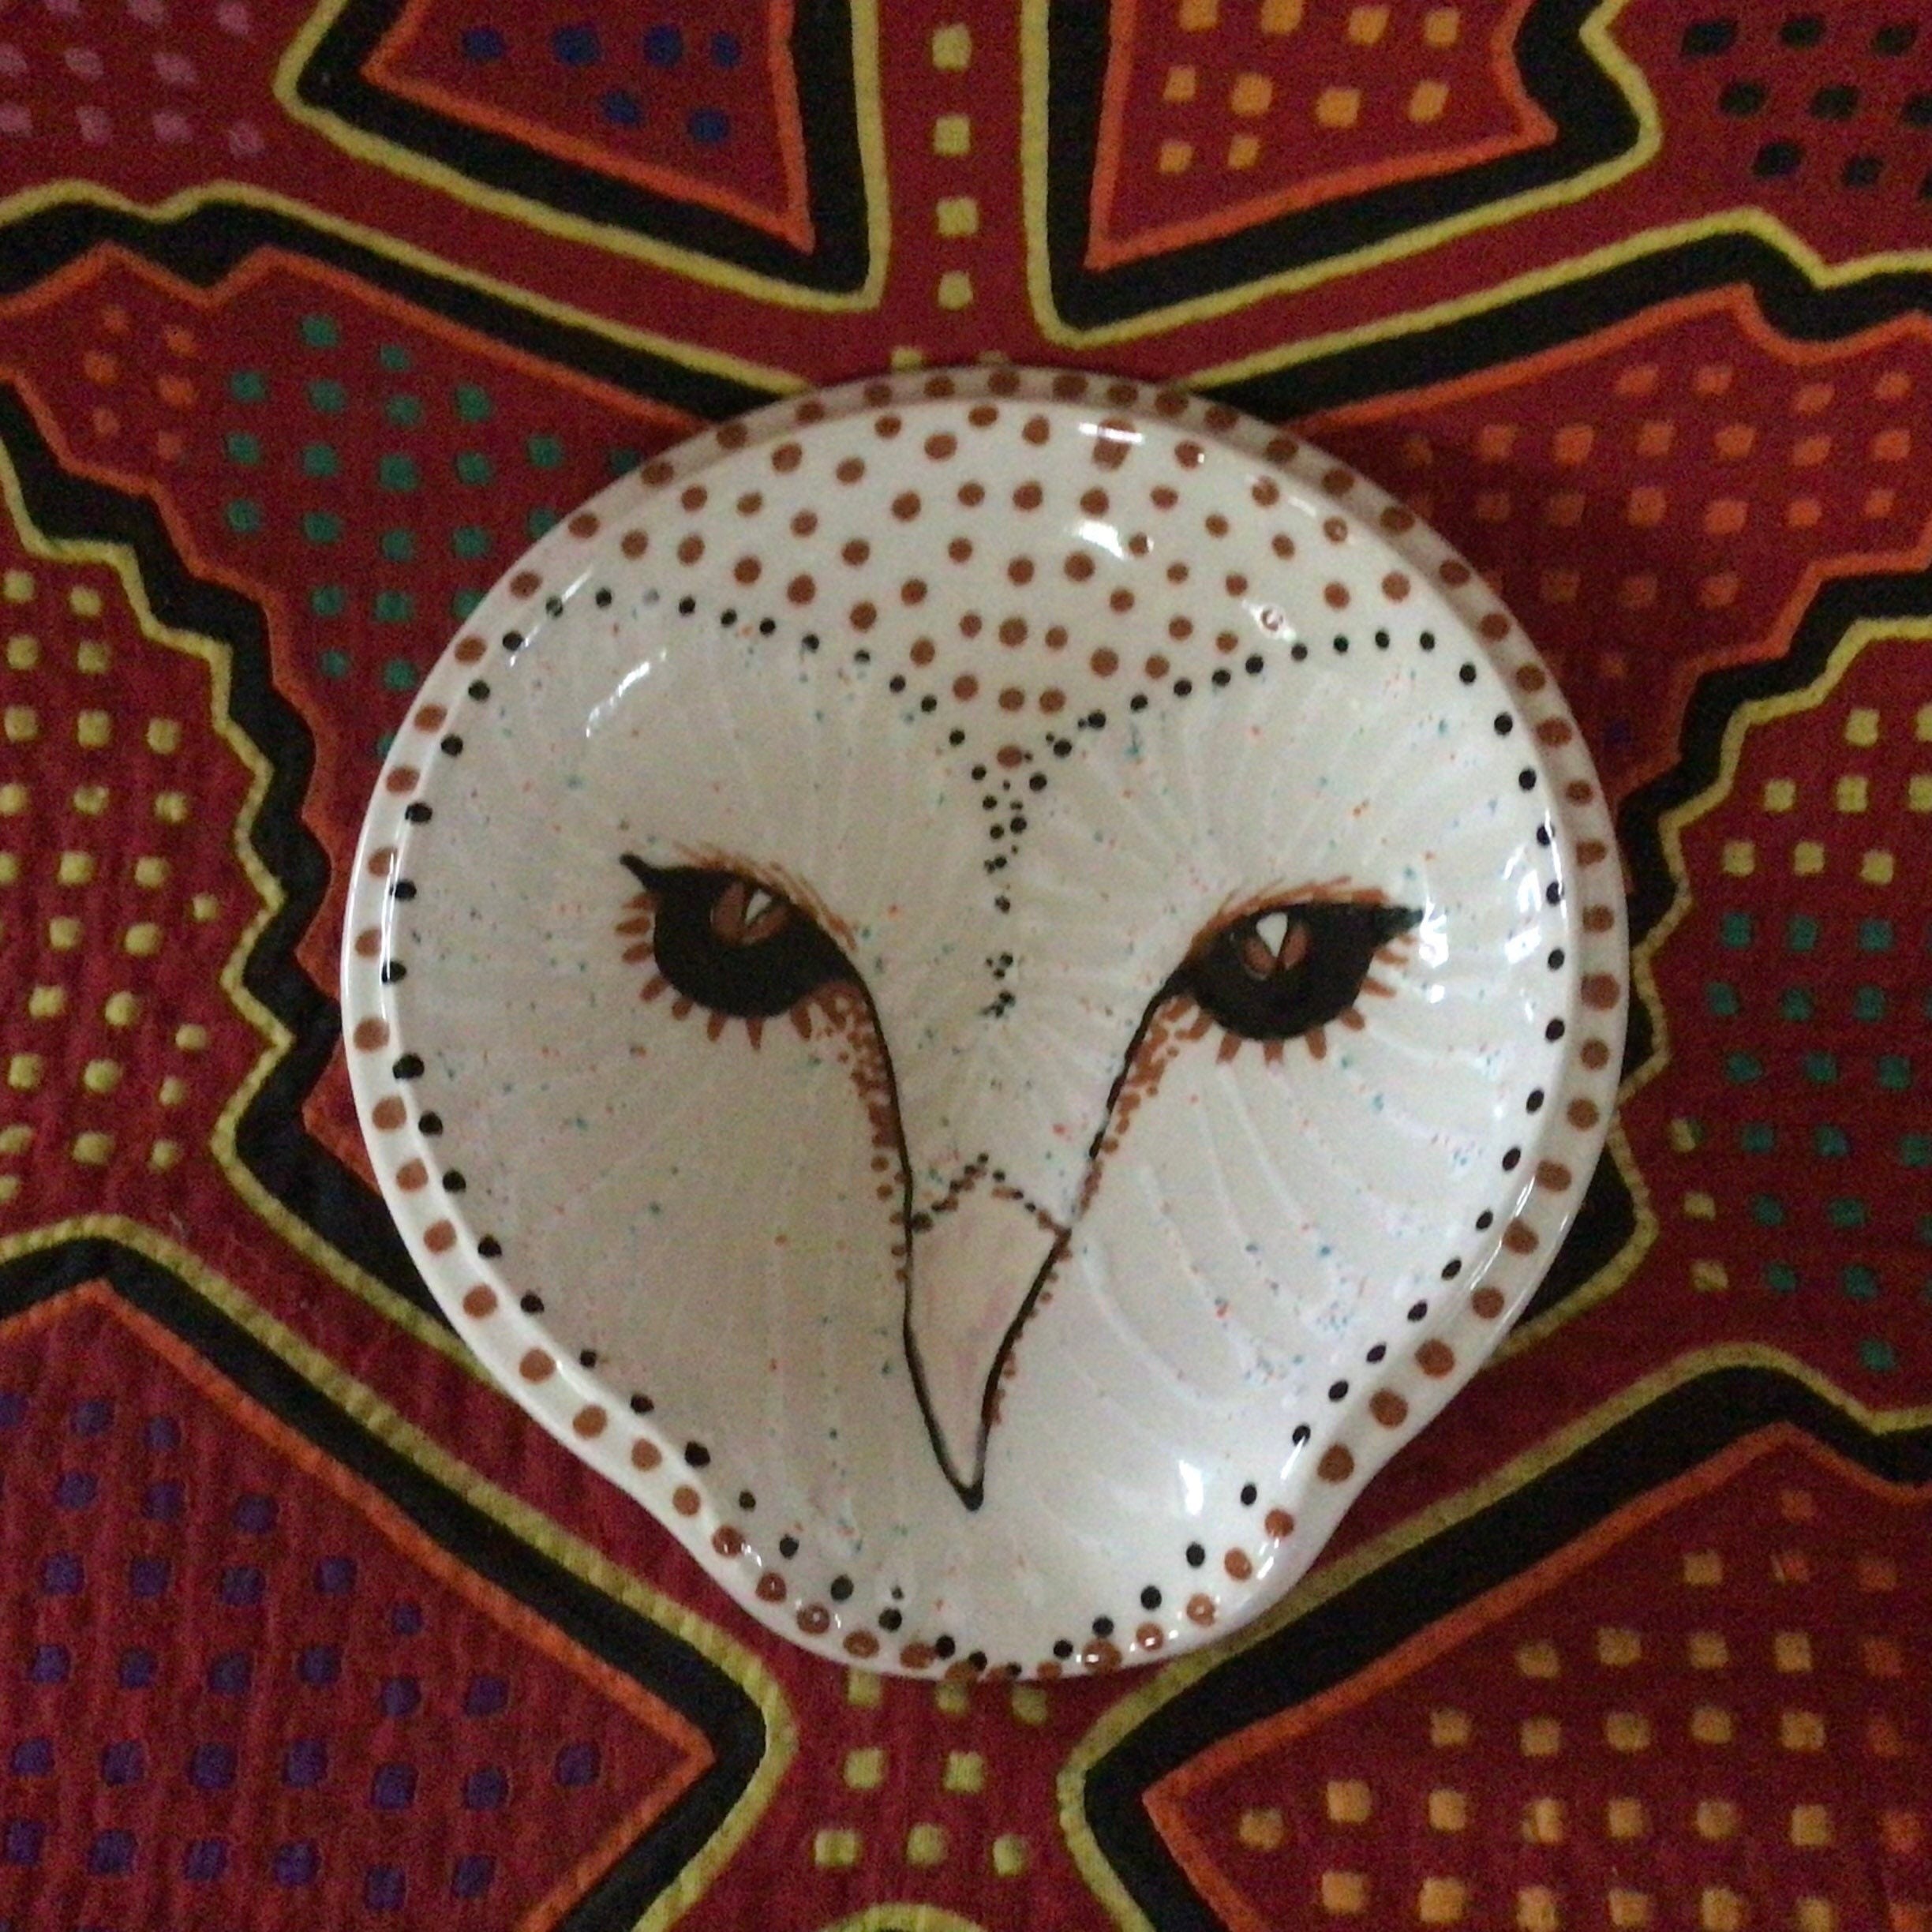 Barn Owl Yarn Bowl Large B & W Hand Painted Ceramic With Four Yarn Channel  